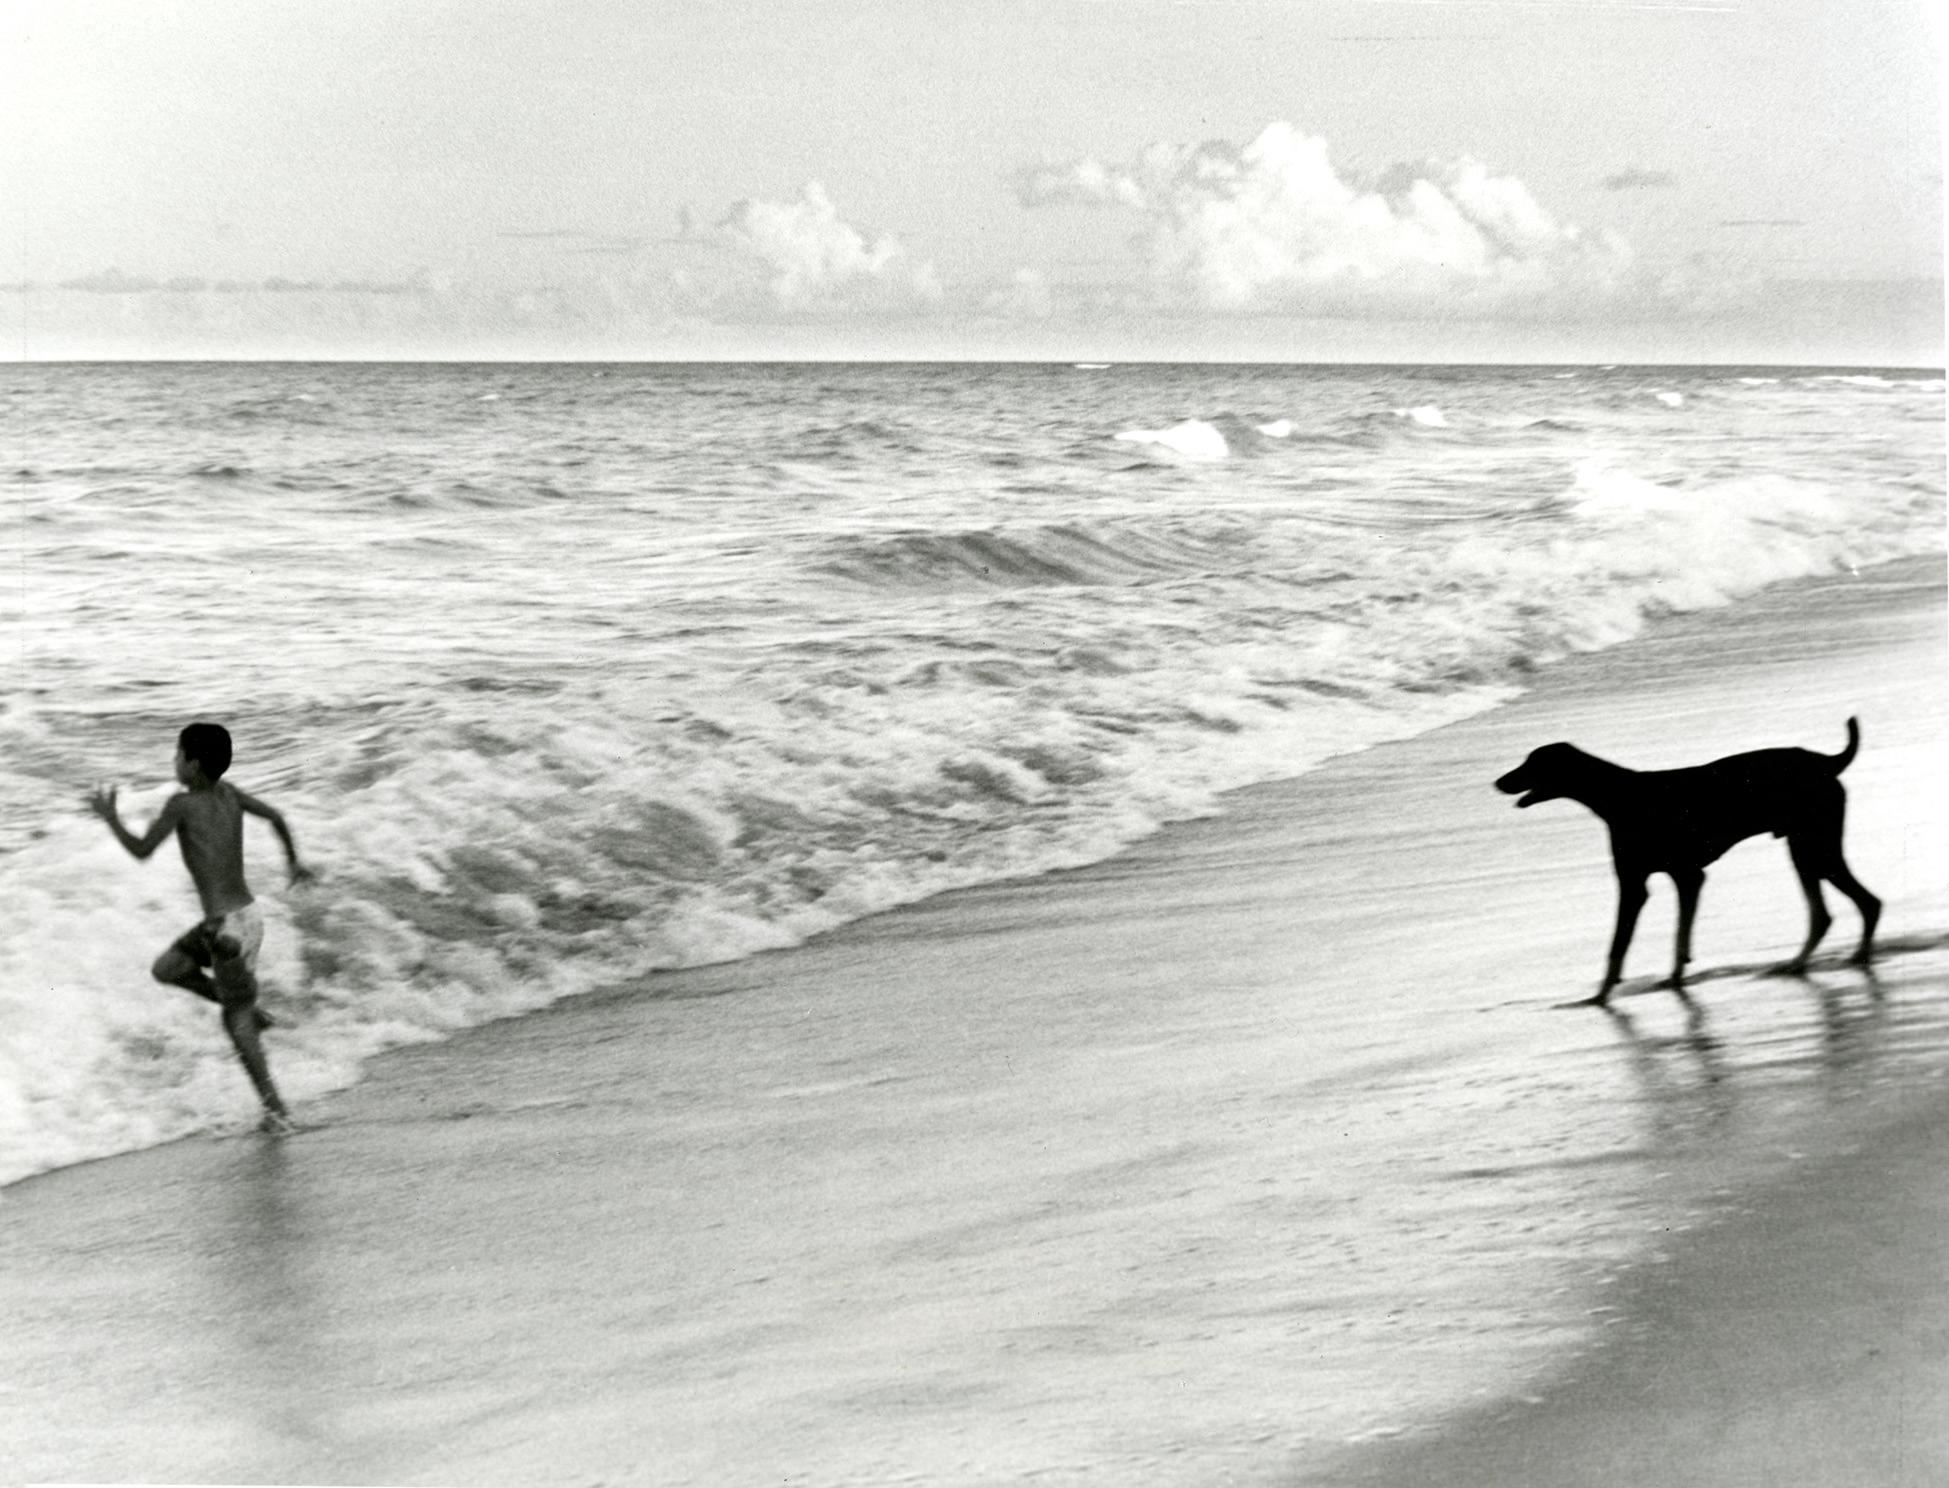 Fernando Natalici Landscape Photograph - Bahia Brazil Photograph (Boy and Dog, Summer)